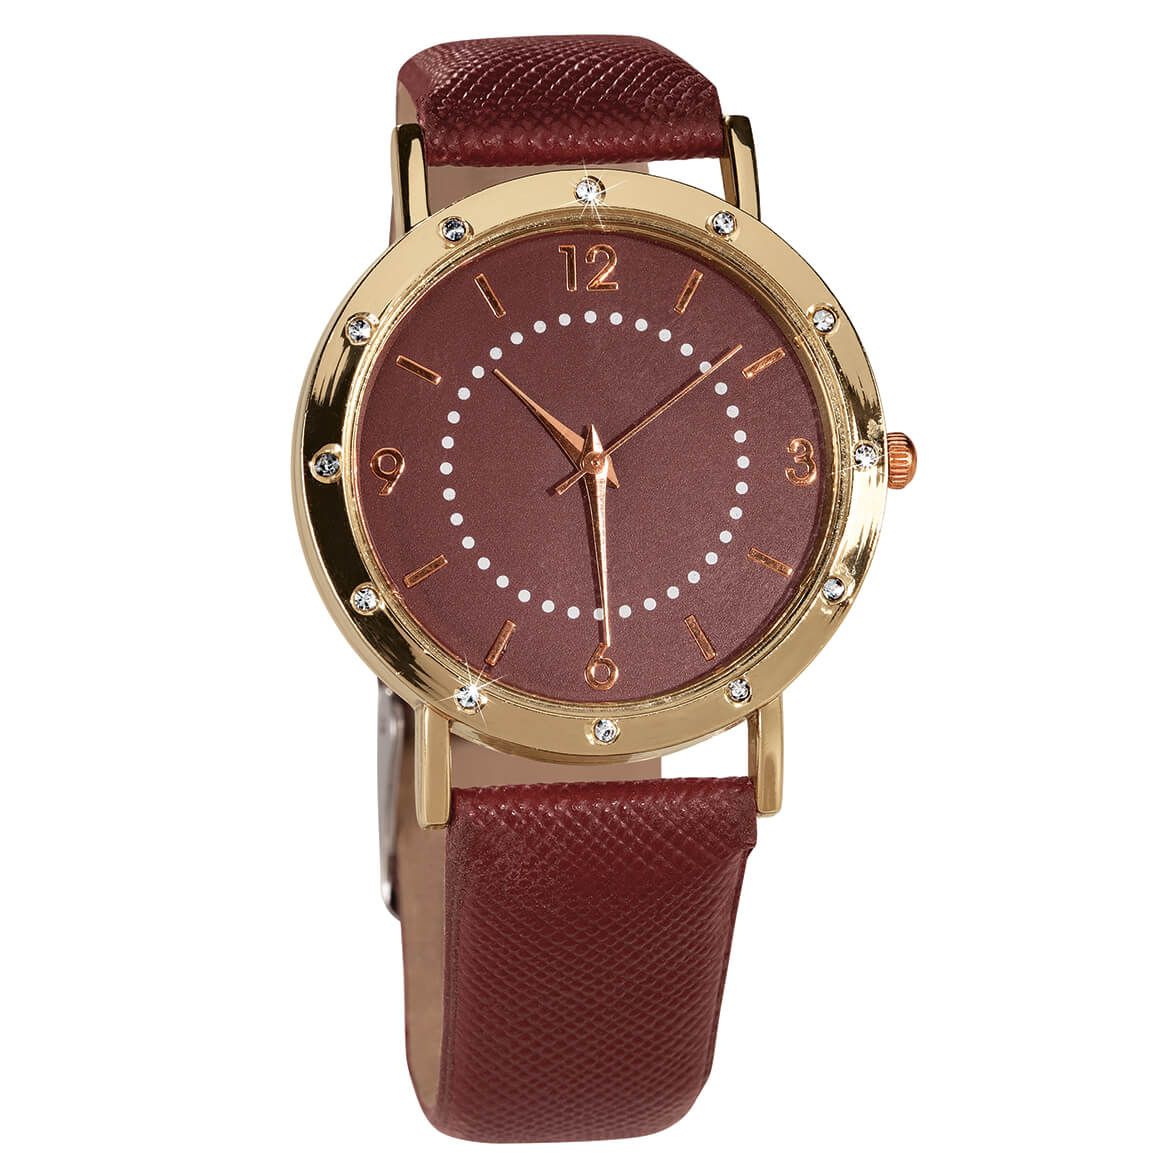 Designer Watch with Swarovski Crystal Accents + '-' + 374150